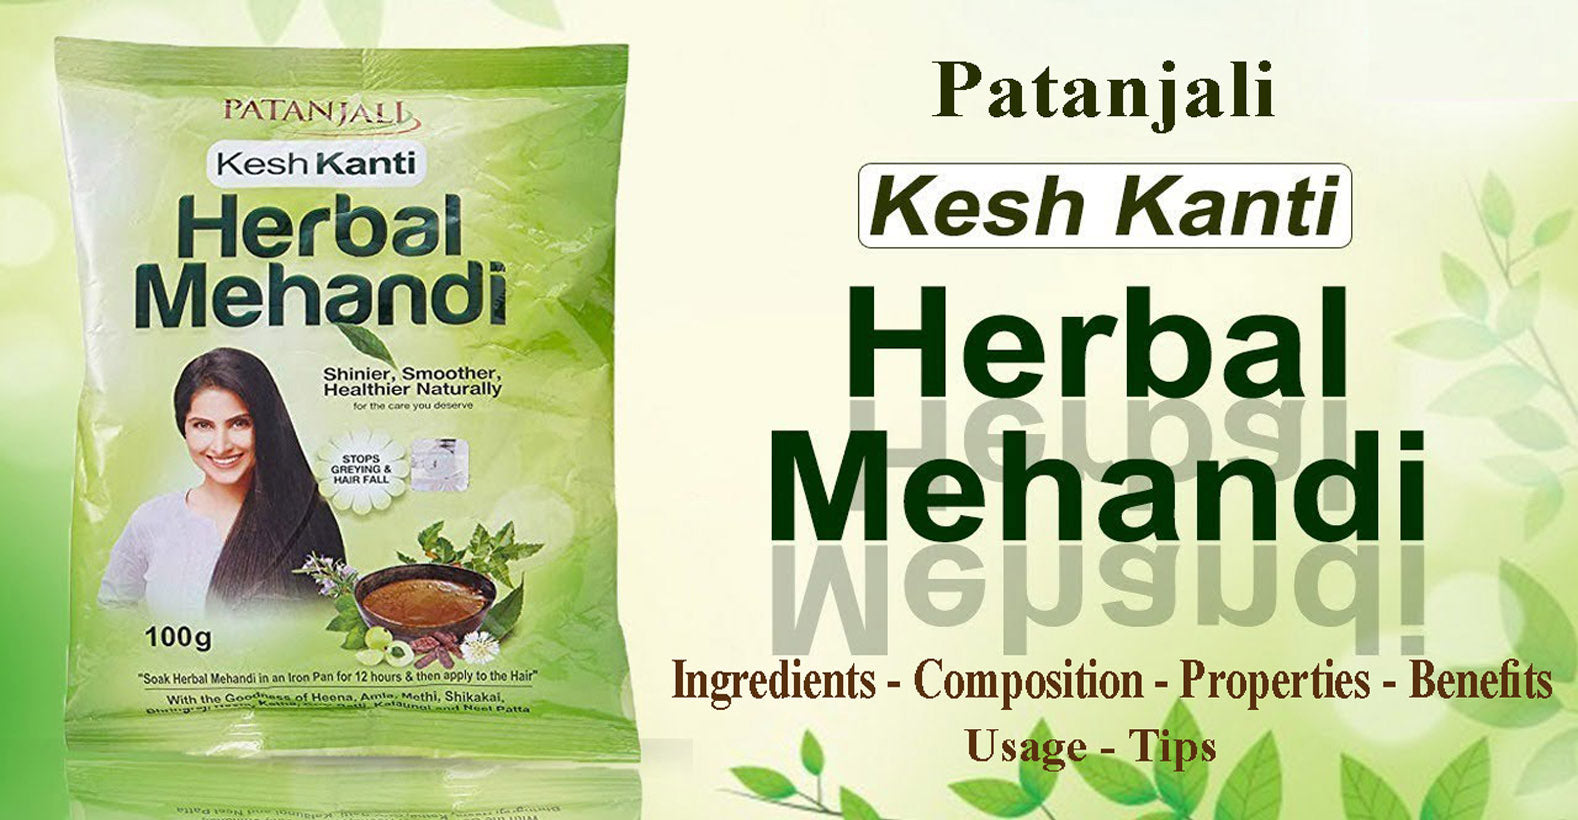 Patanjali kesh kanti herbal mehandihenna Review  How to make and apply  henna on hair  YouTube